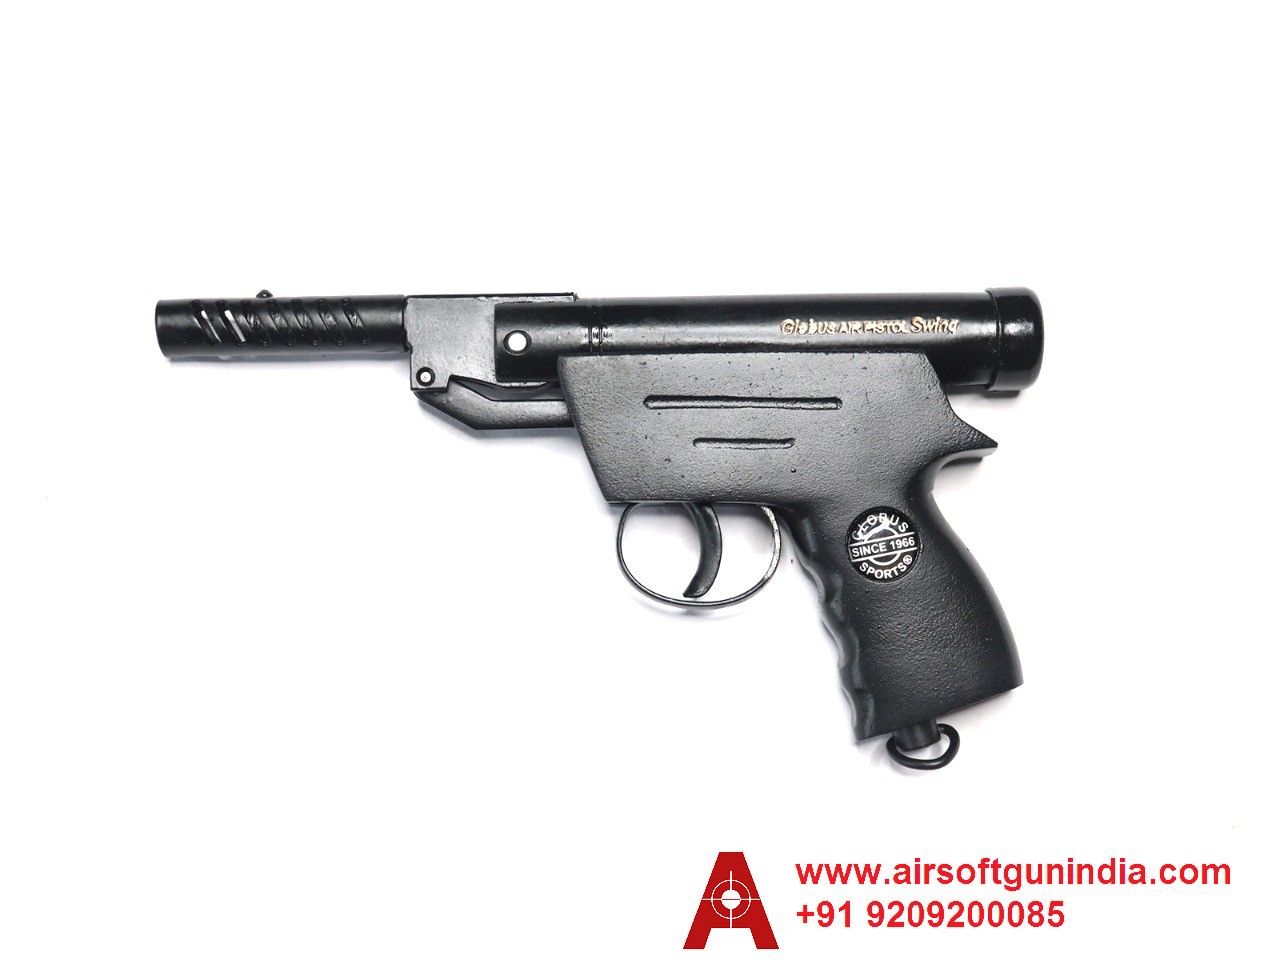 Globus Swing Black Sports Single-Shot .177 Caliber / 4.5 Mm Indian Air Pistol By Airsoft Gun India.